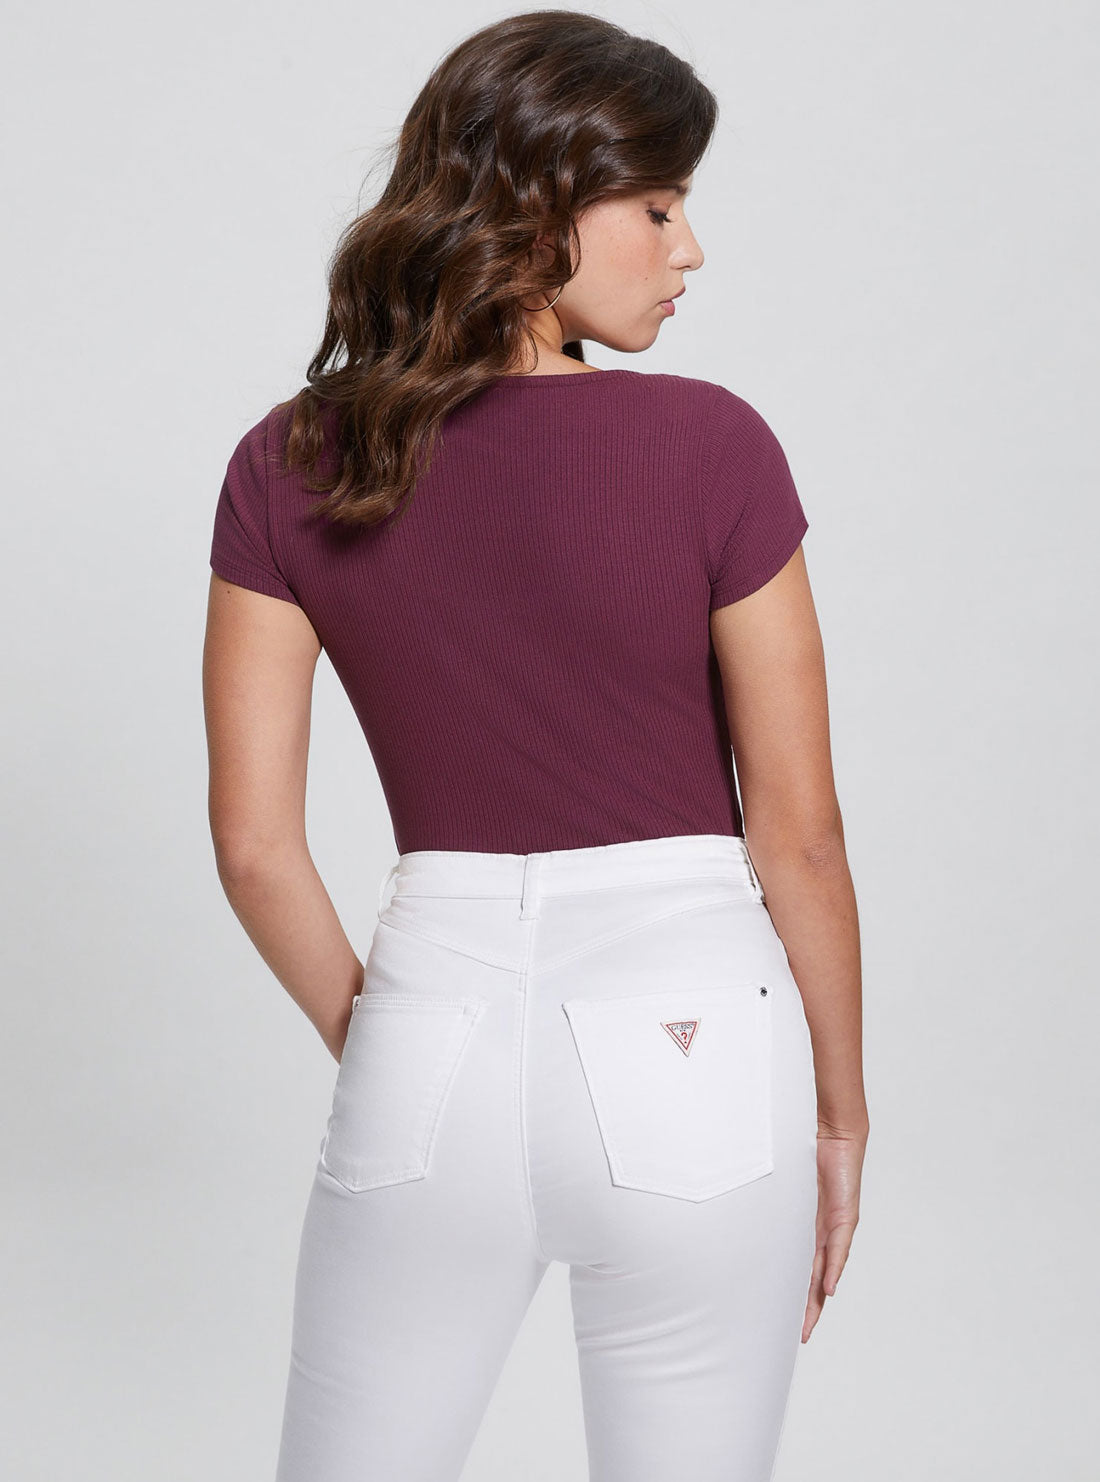 Eco Purple Karlee Jewel Henley T-Shirt | GUESS Women's Apparel | back view